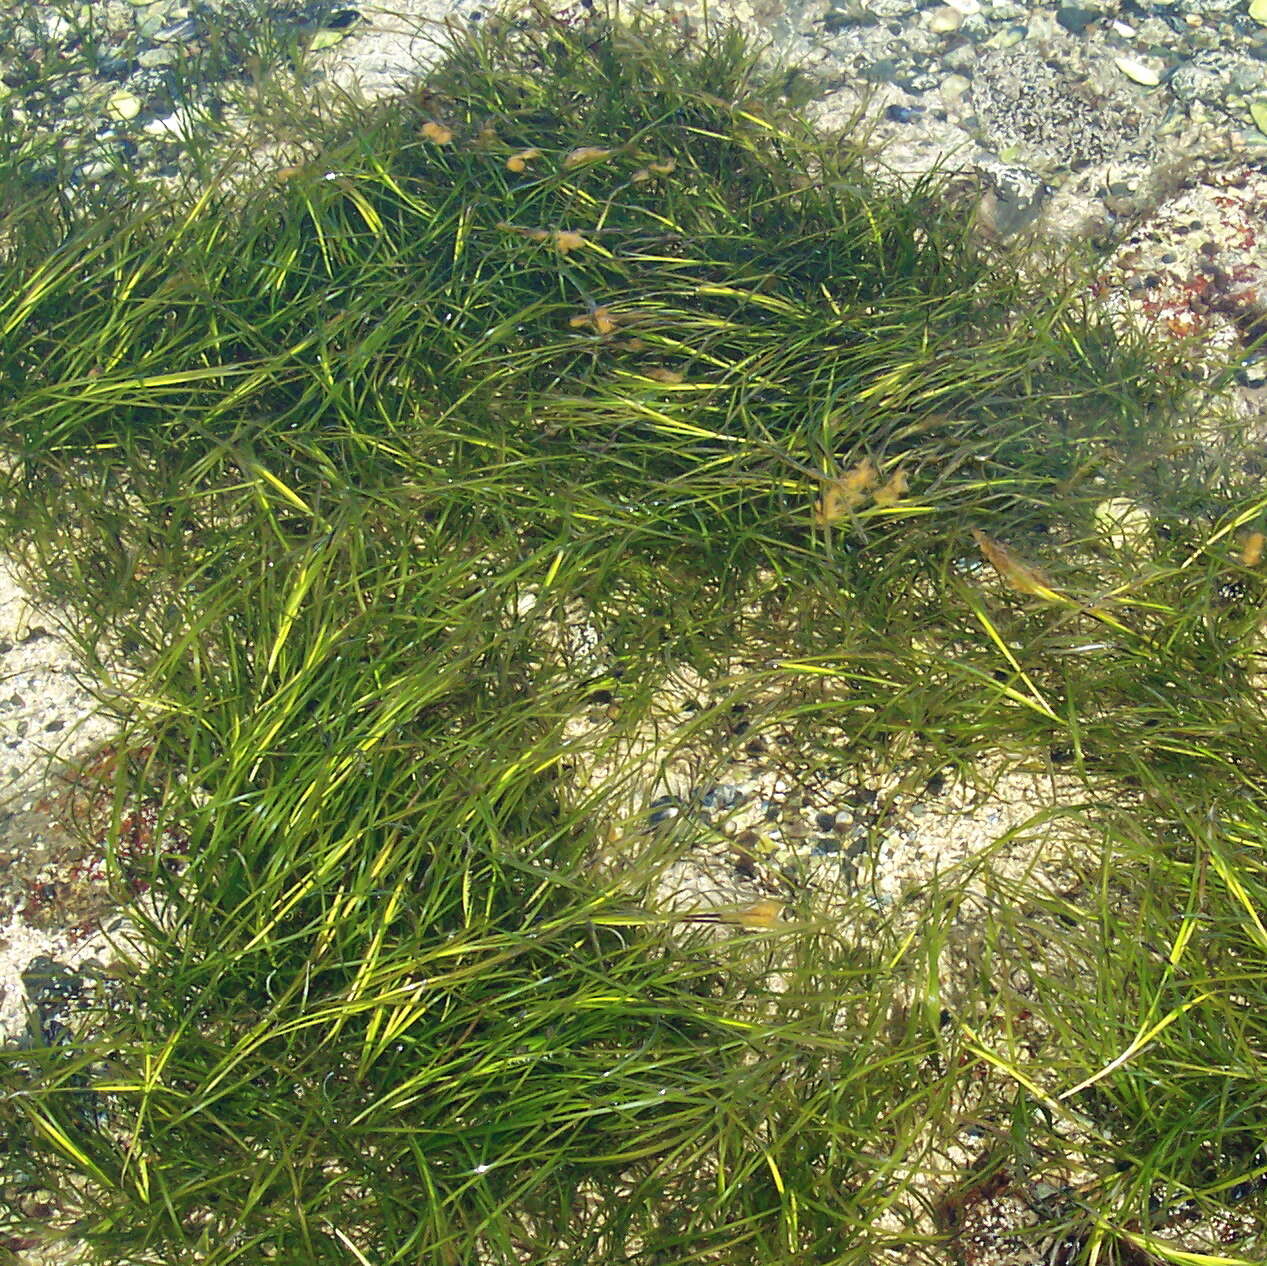 Image of Eelgrass